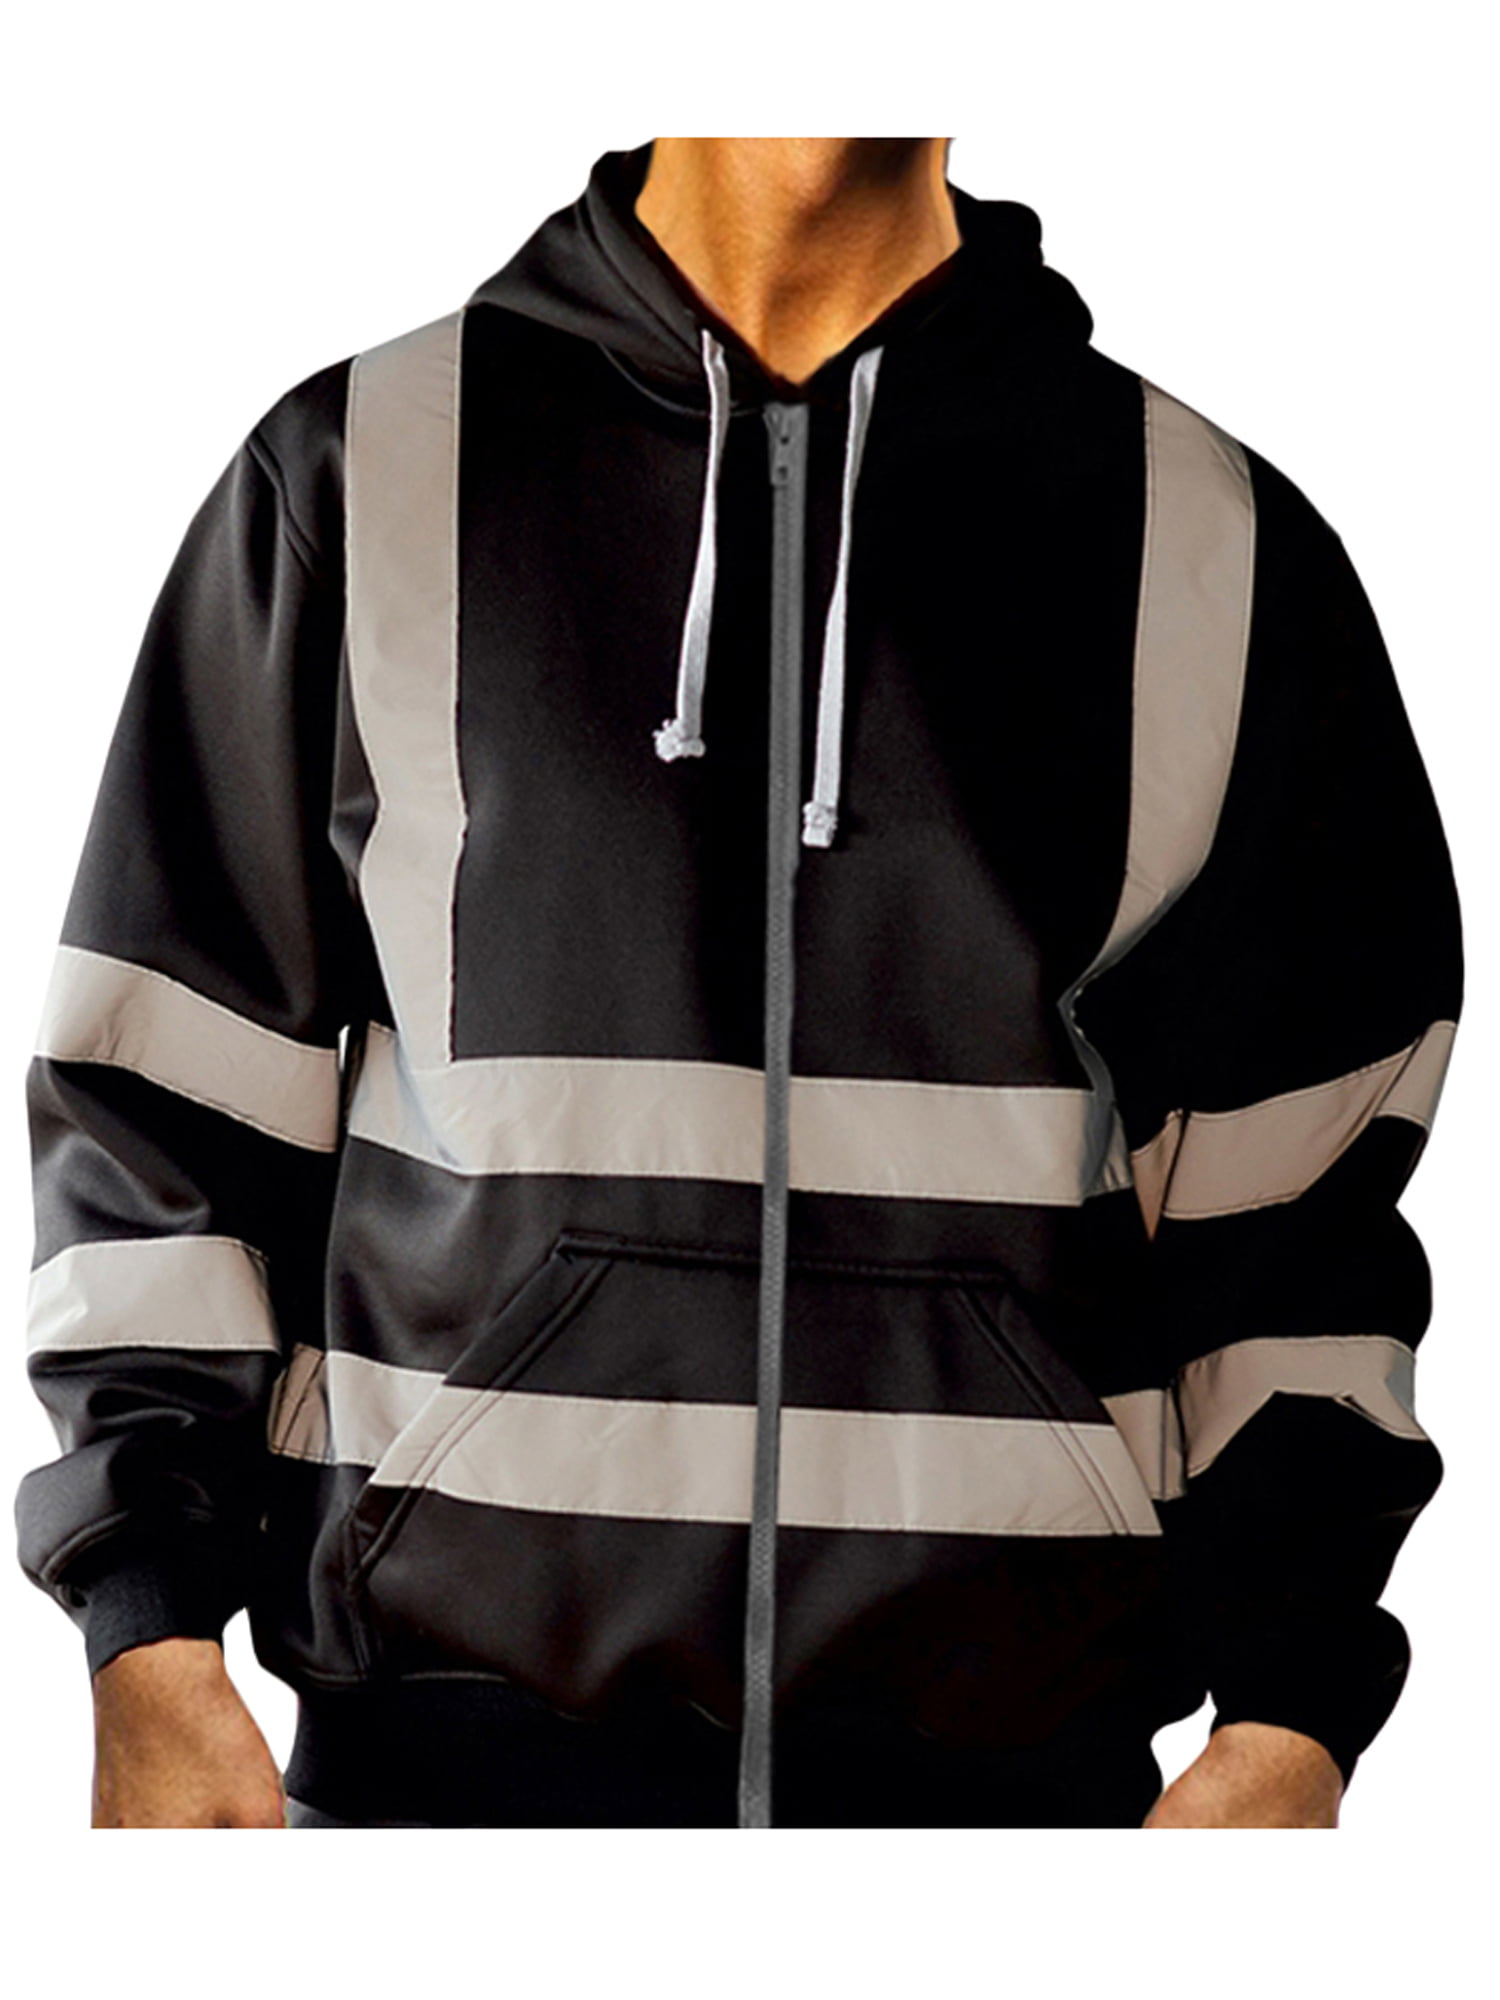 Mens Hi Viz Vis Visibility Work Hoodie Sweatshirt Reflective Zipper Coat Jacket